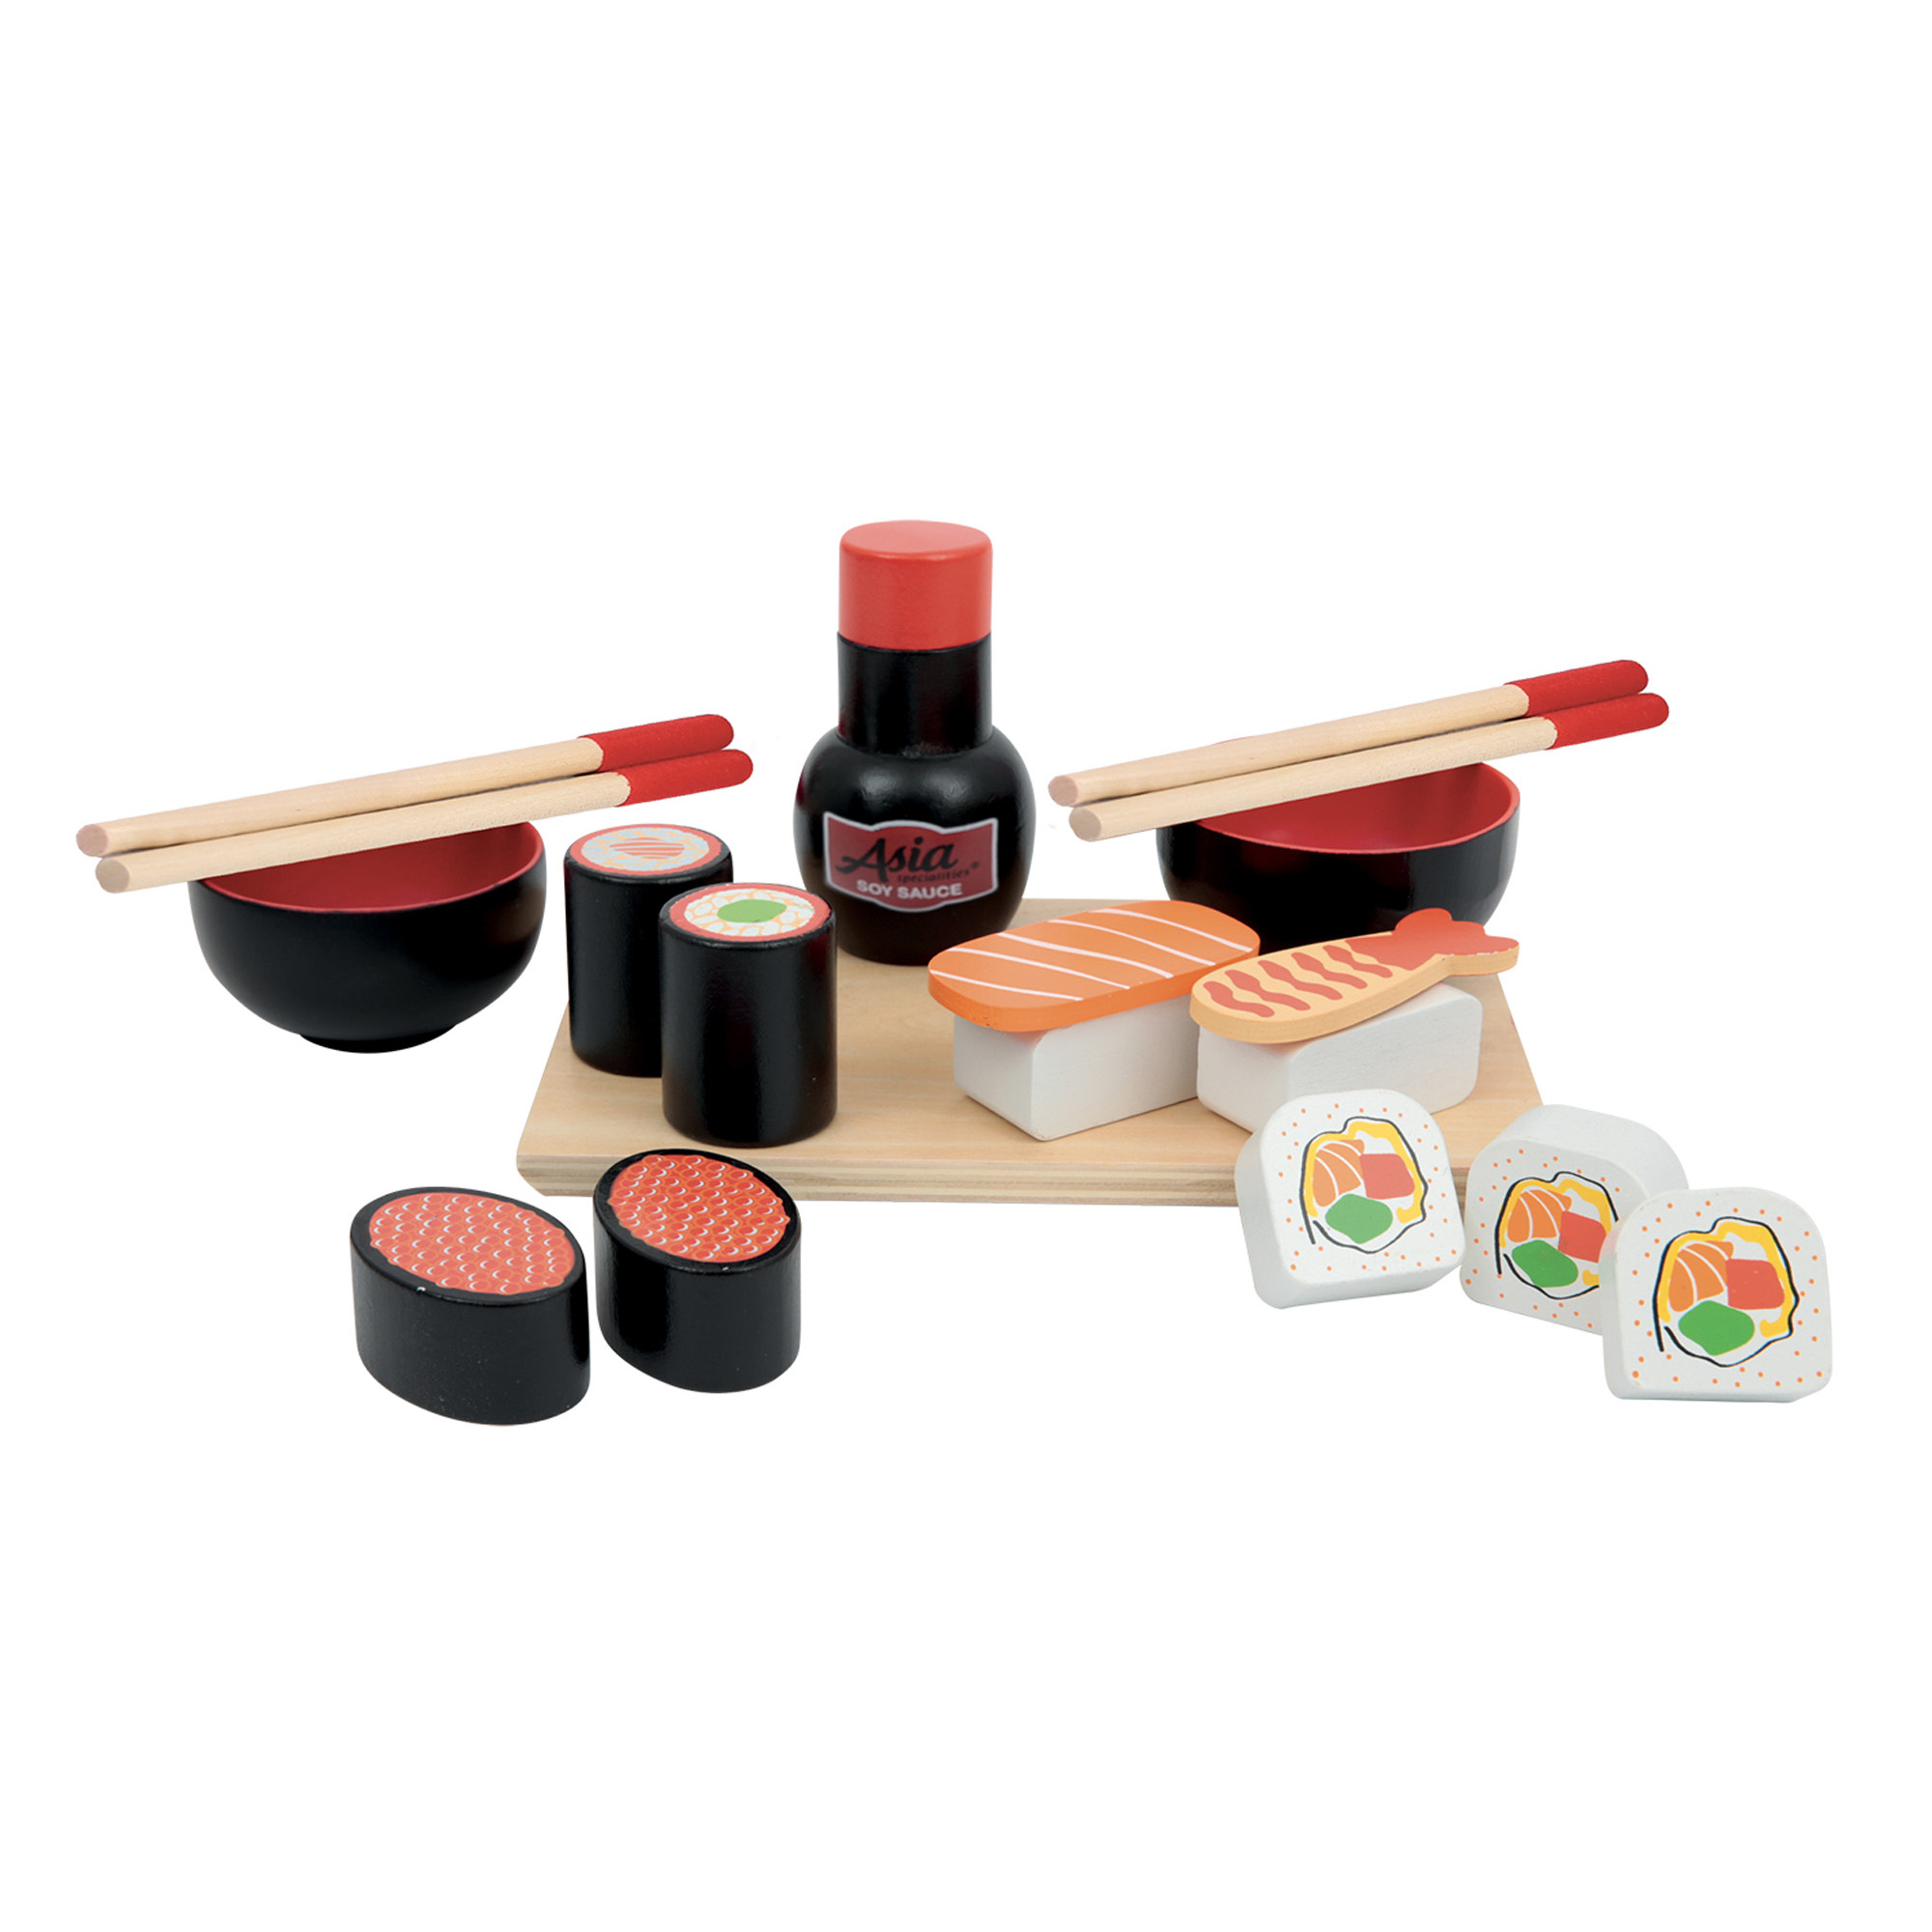 Sushi set Wood n' Play - Wood n' Play